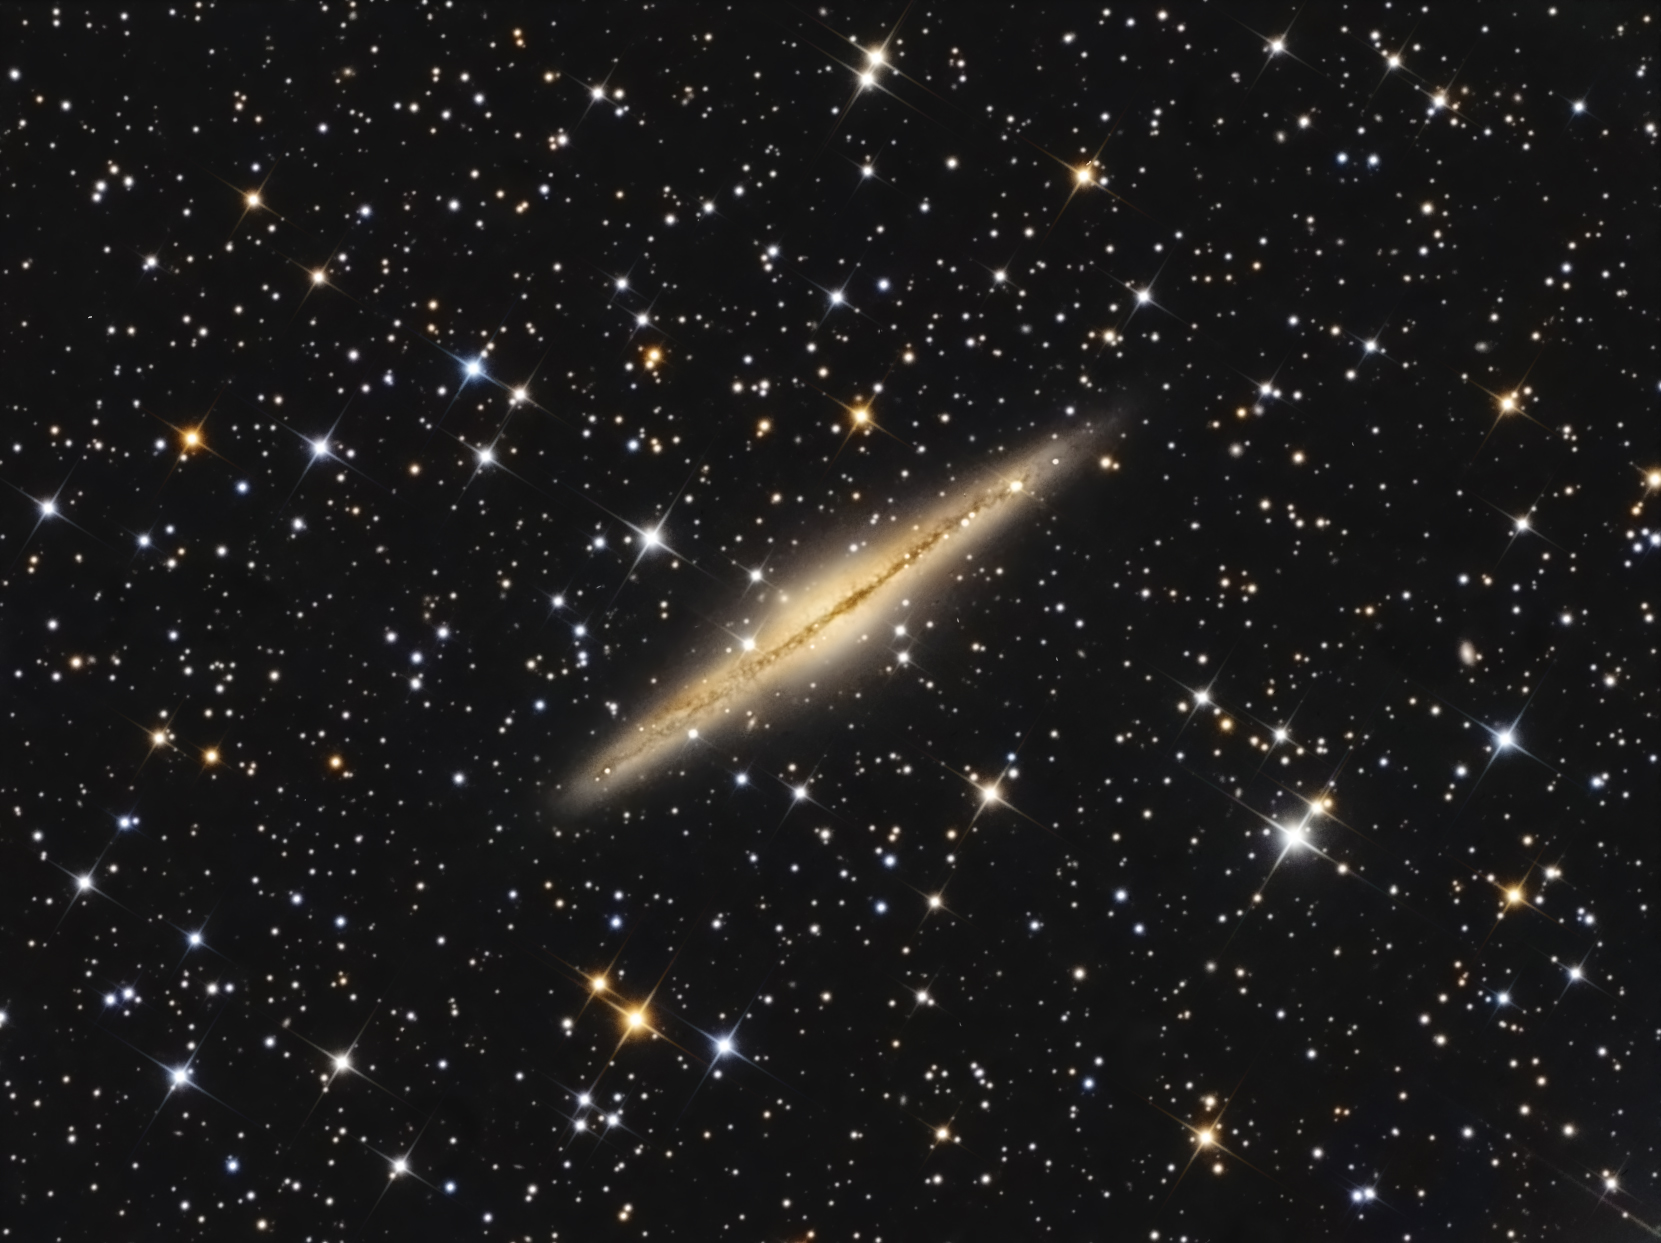 NGC 891 - Edge-On Galaxy in Andromeda...